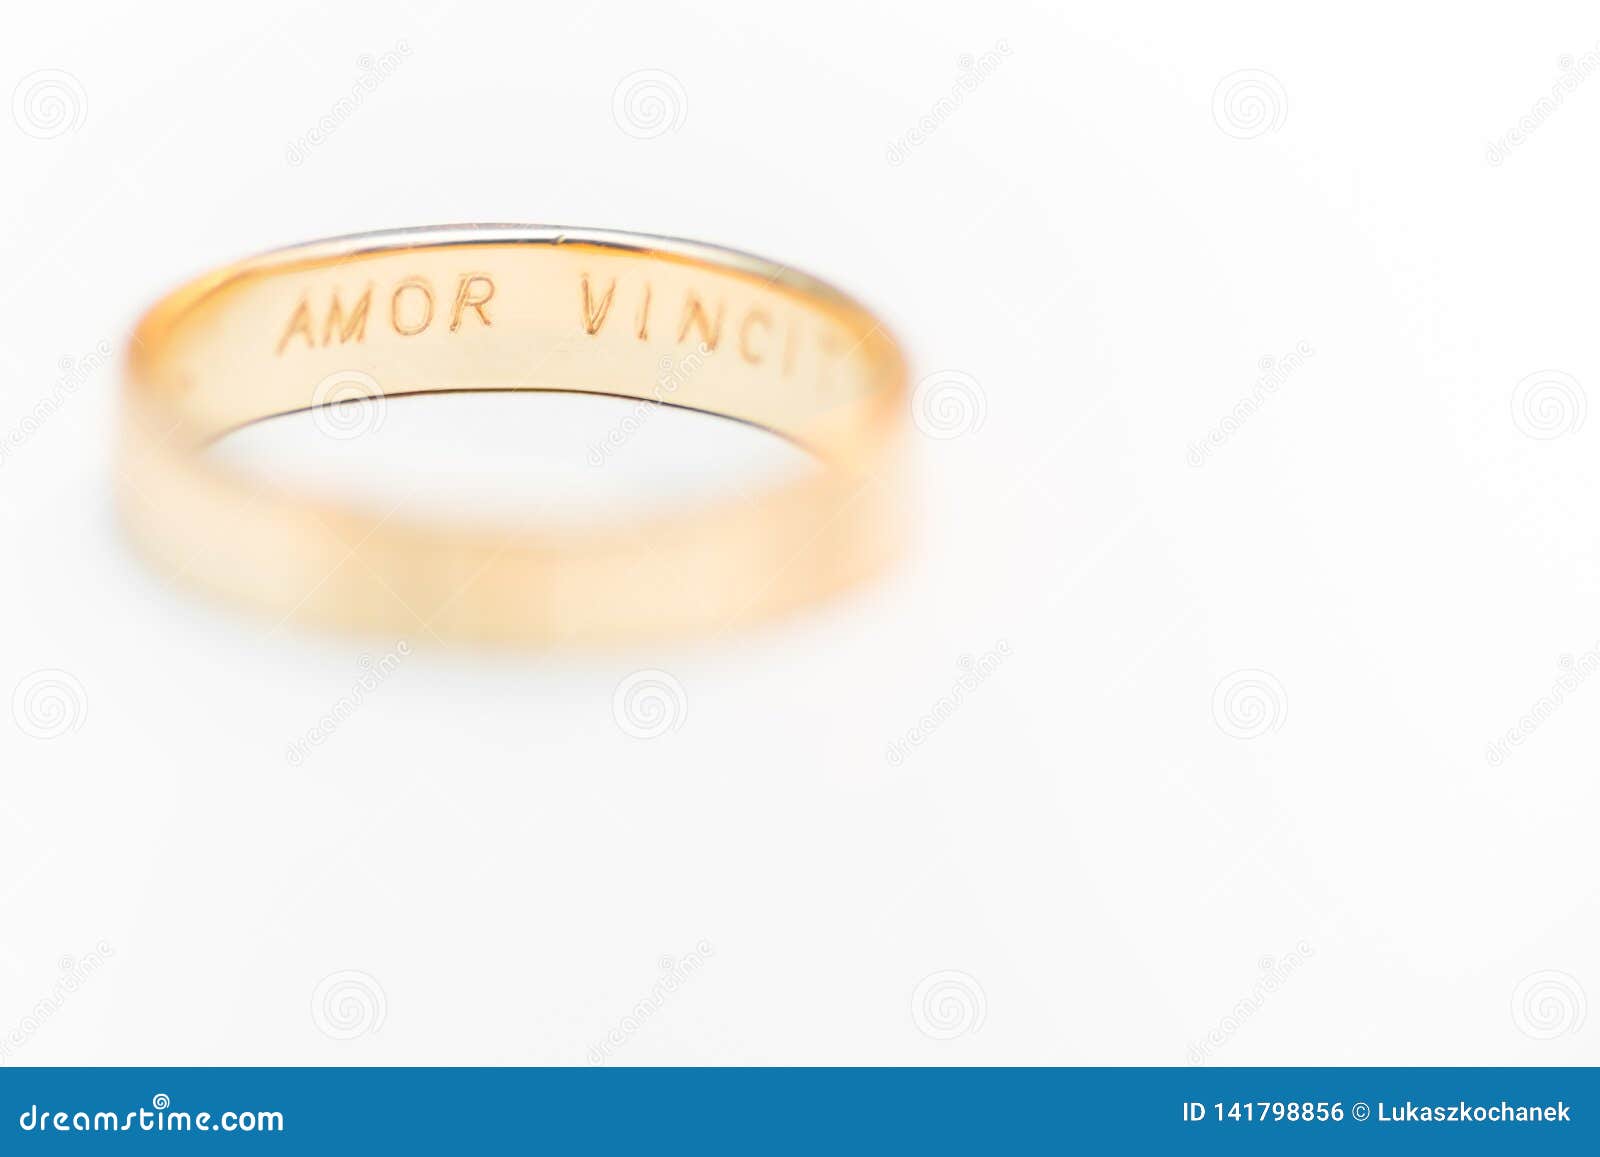 golden wedding ring  on white - amor vincit omnia engraved